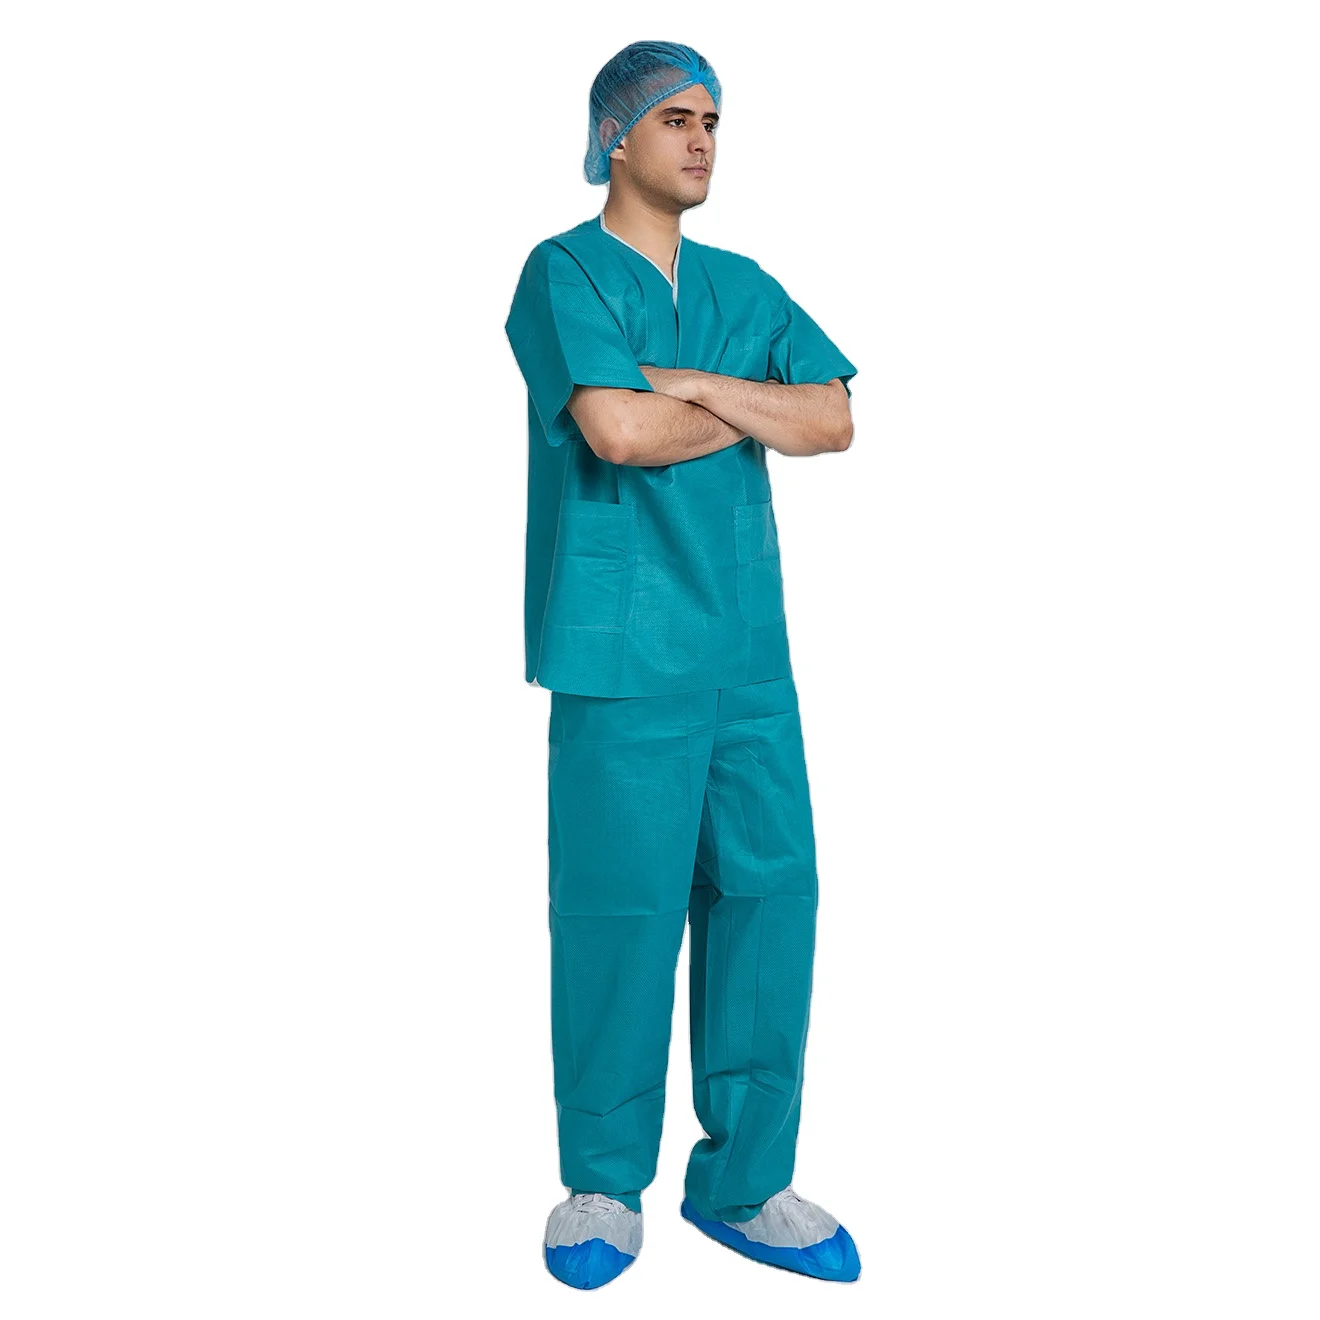 

Short Sleeve SMS Hospital Scrubs Suit Set Clothing Disposable Uniform Scrub Suit Nursing Scrubs, Blue/green